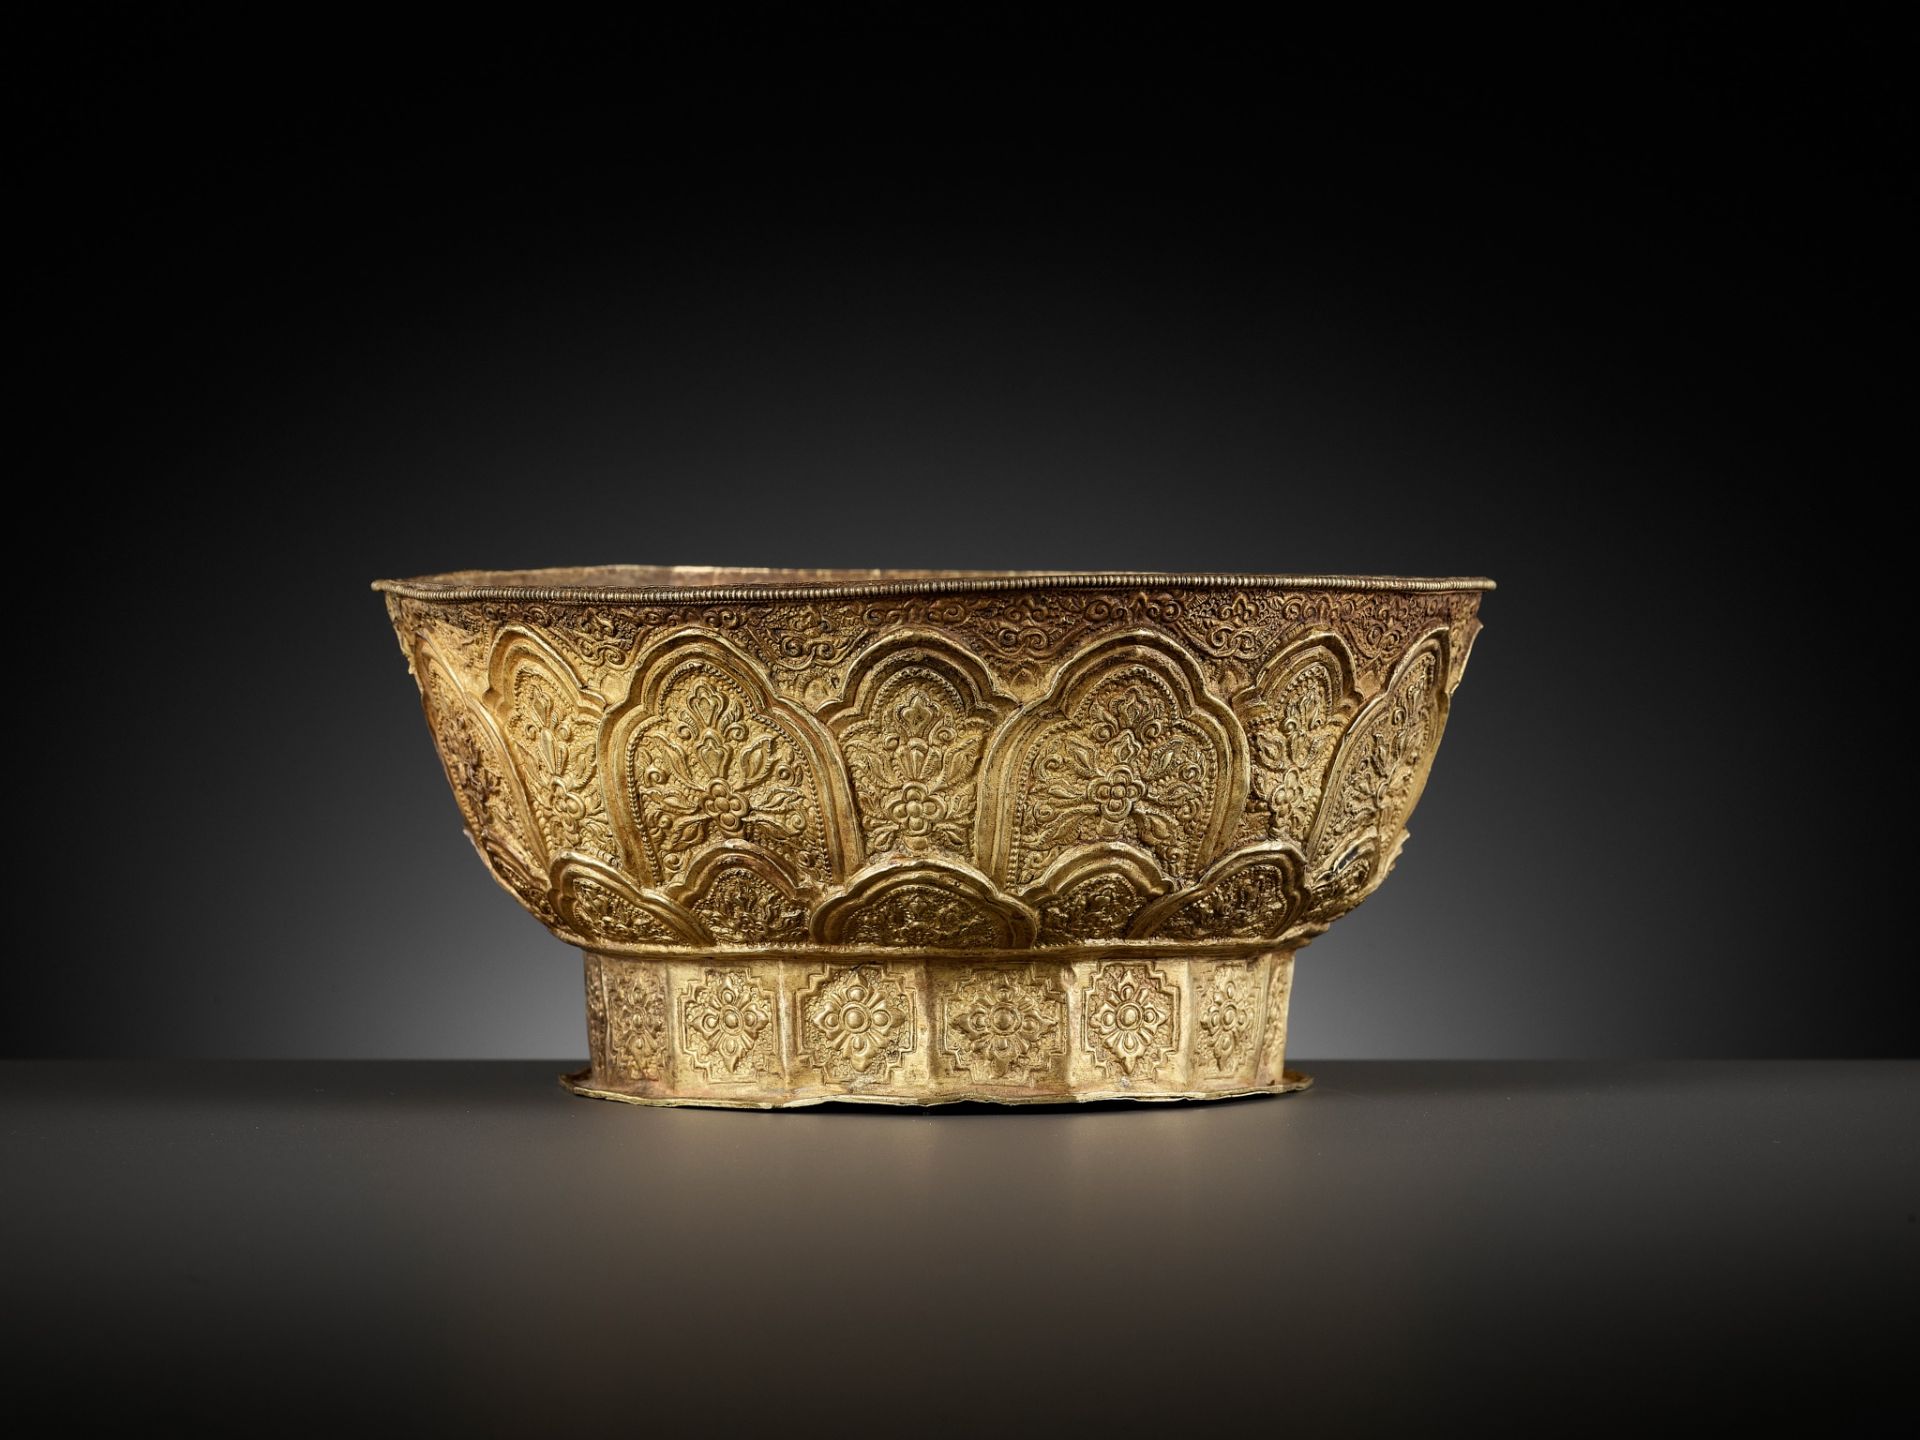 A SILVER-INLAID GOLD REPOUSSÉ BOWL DEPICTING GARUDA, VIETNAM,FORMER KINGDOMS OF CHAMPA,CIRCA 10TH C. - Image 14 of 18